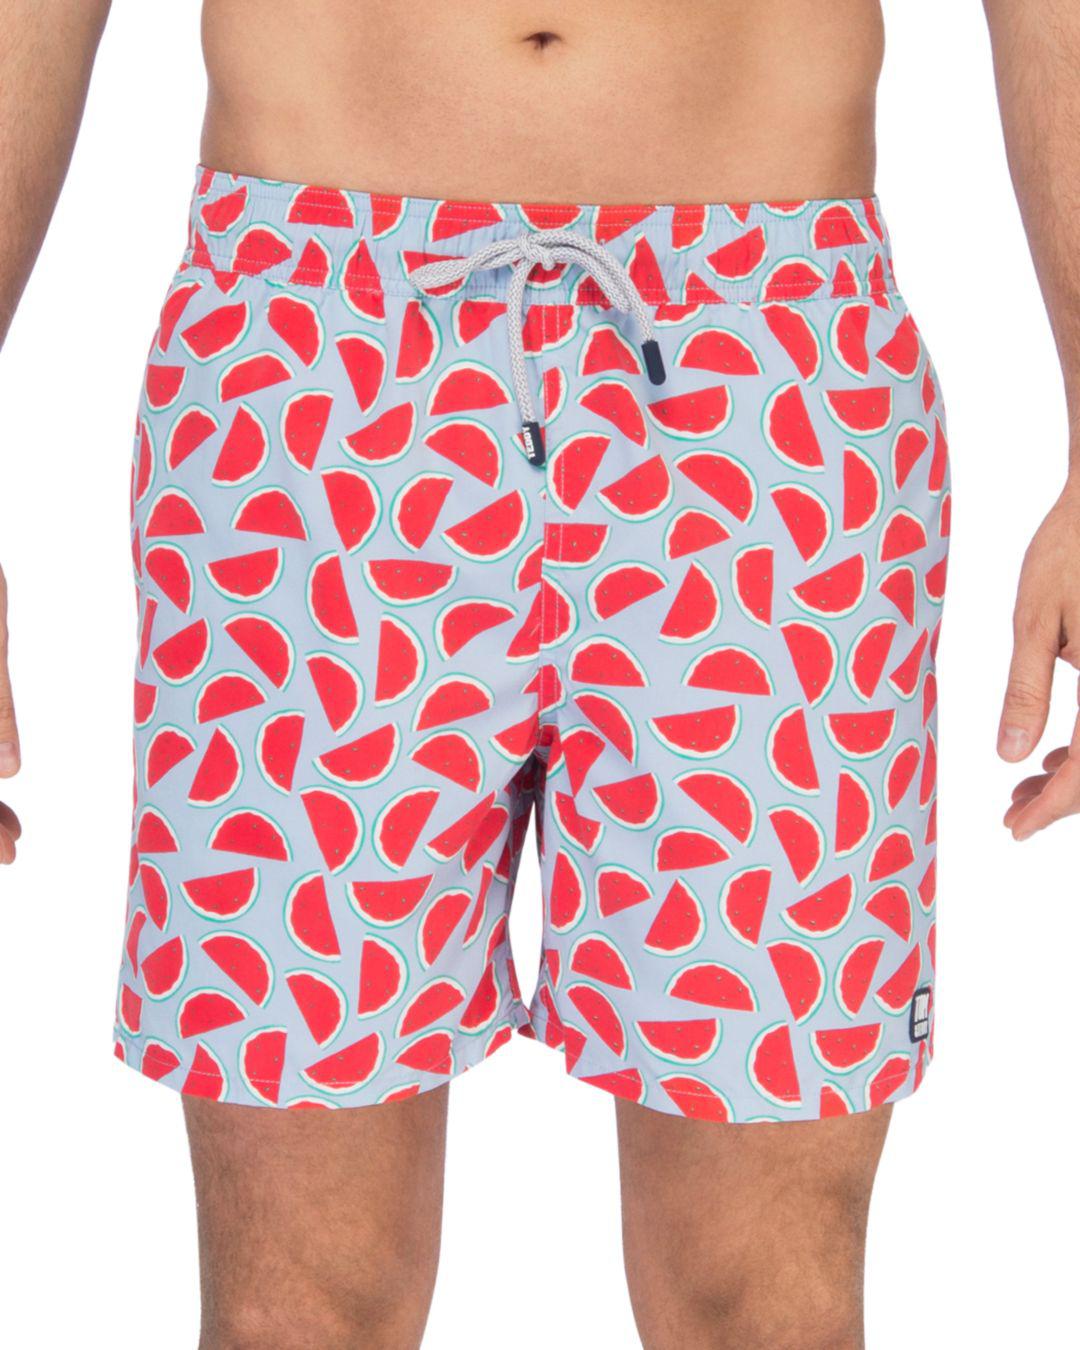 Tom & Teddy Watermelon Print Swim Trunks in Red for Men - Lyst